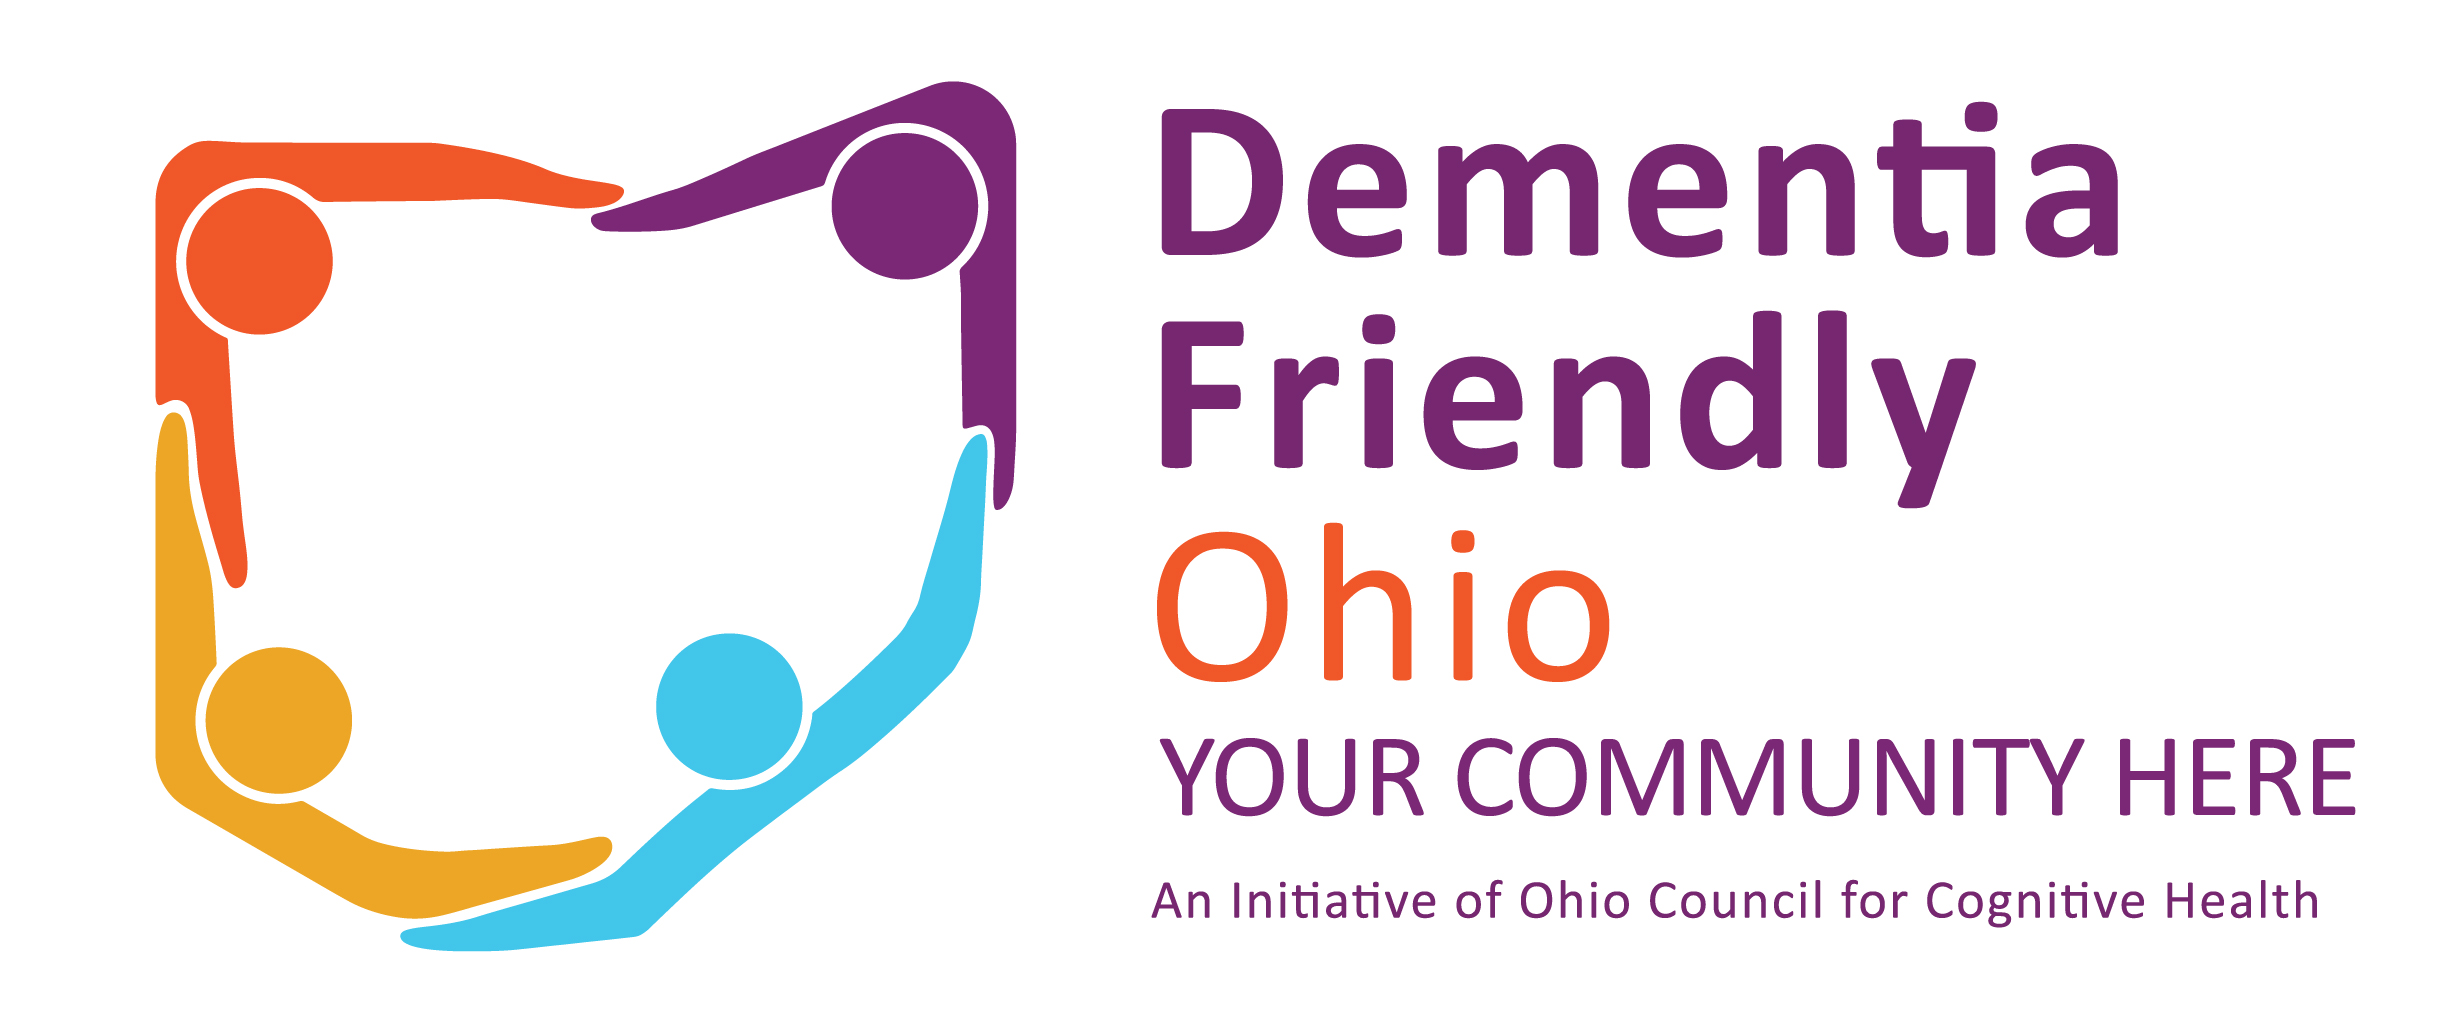 Dementia Friendly Ohio Logo: YOUR COMMUNITY HERE